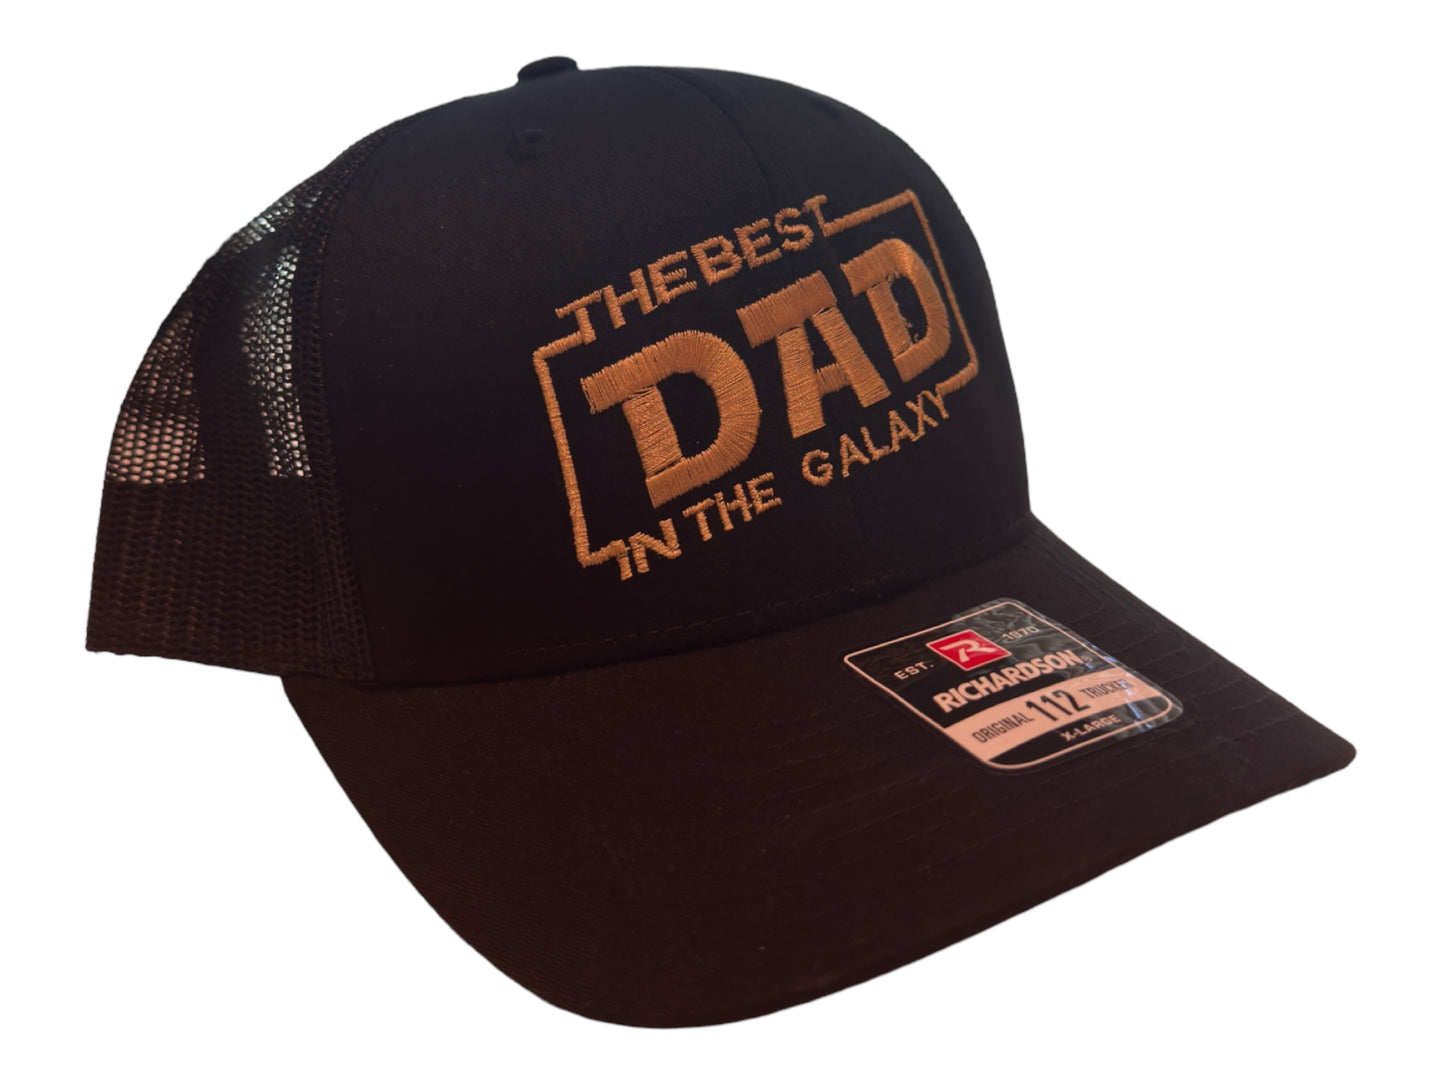 "Best Dad in the Galaxy" Hat - Black